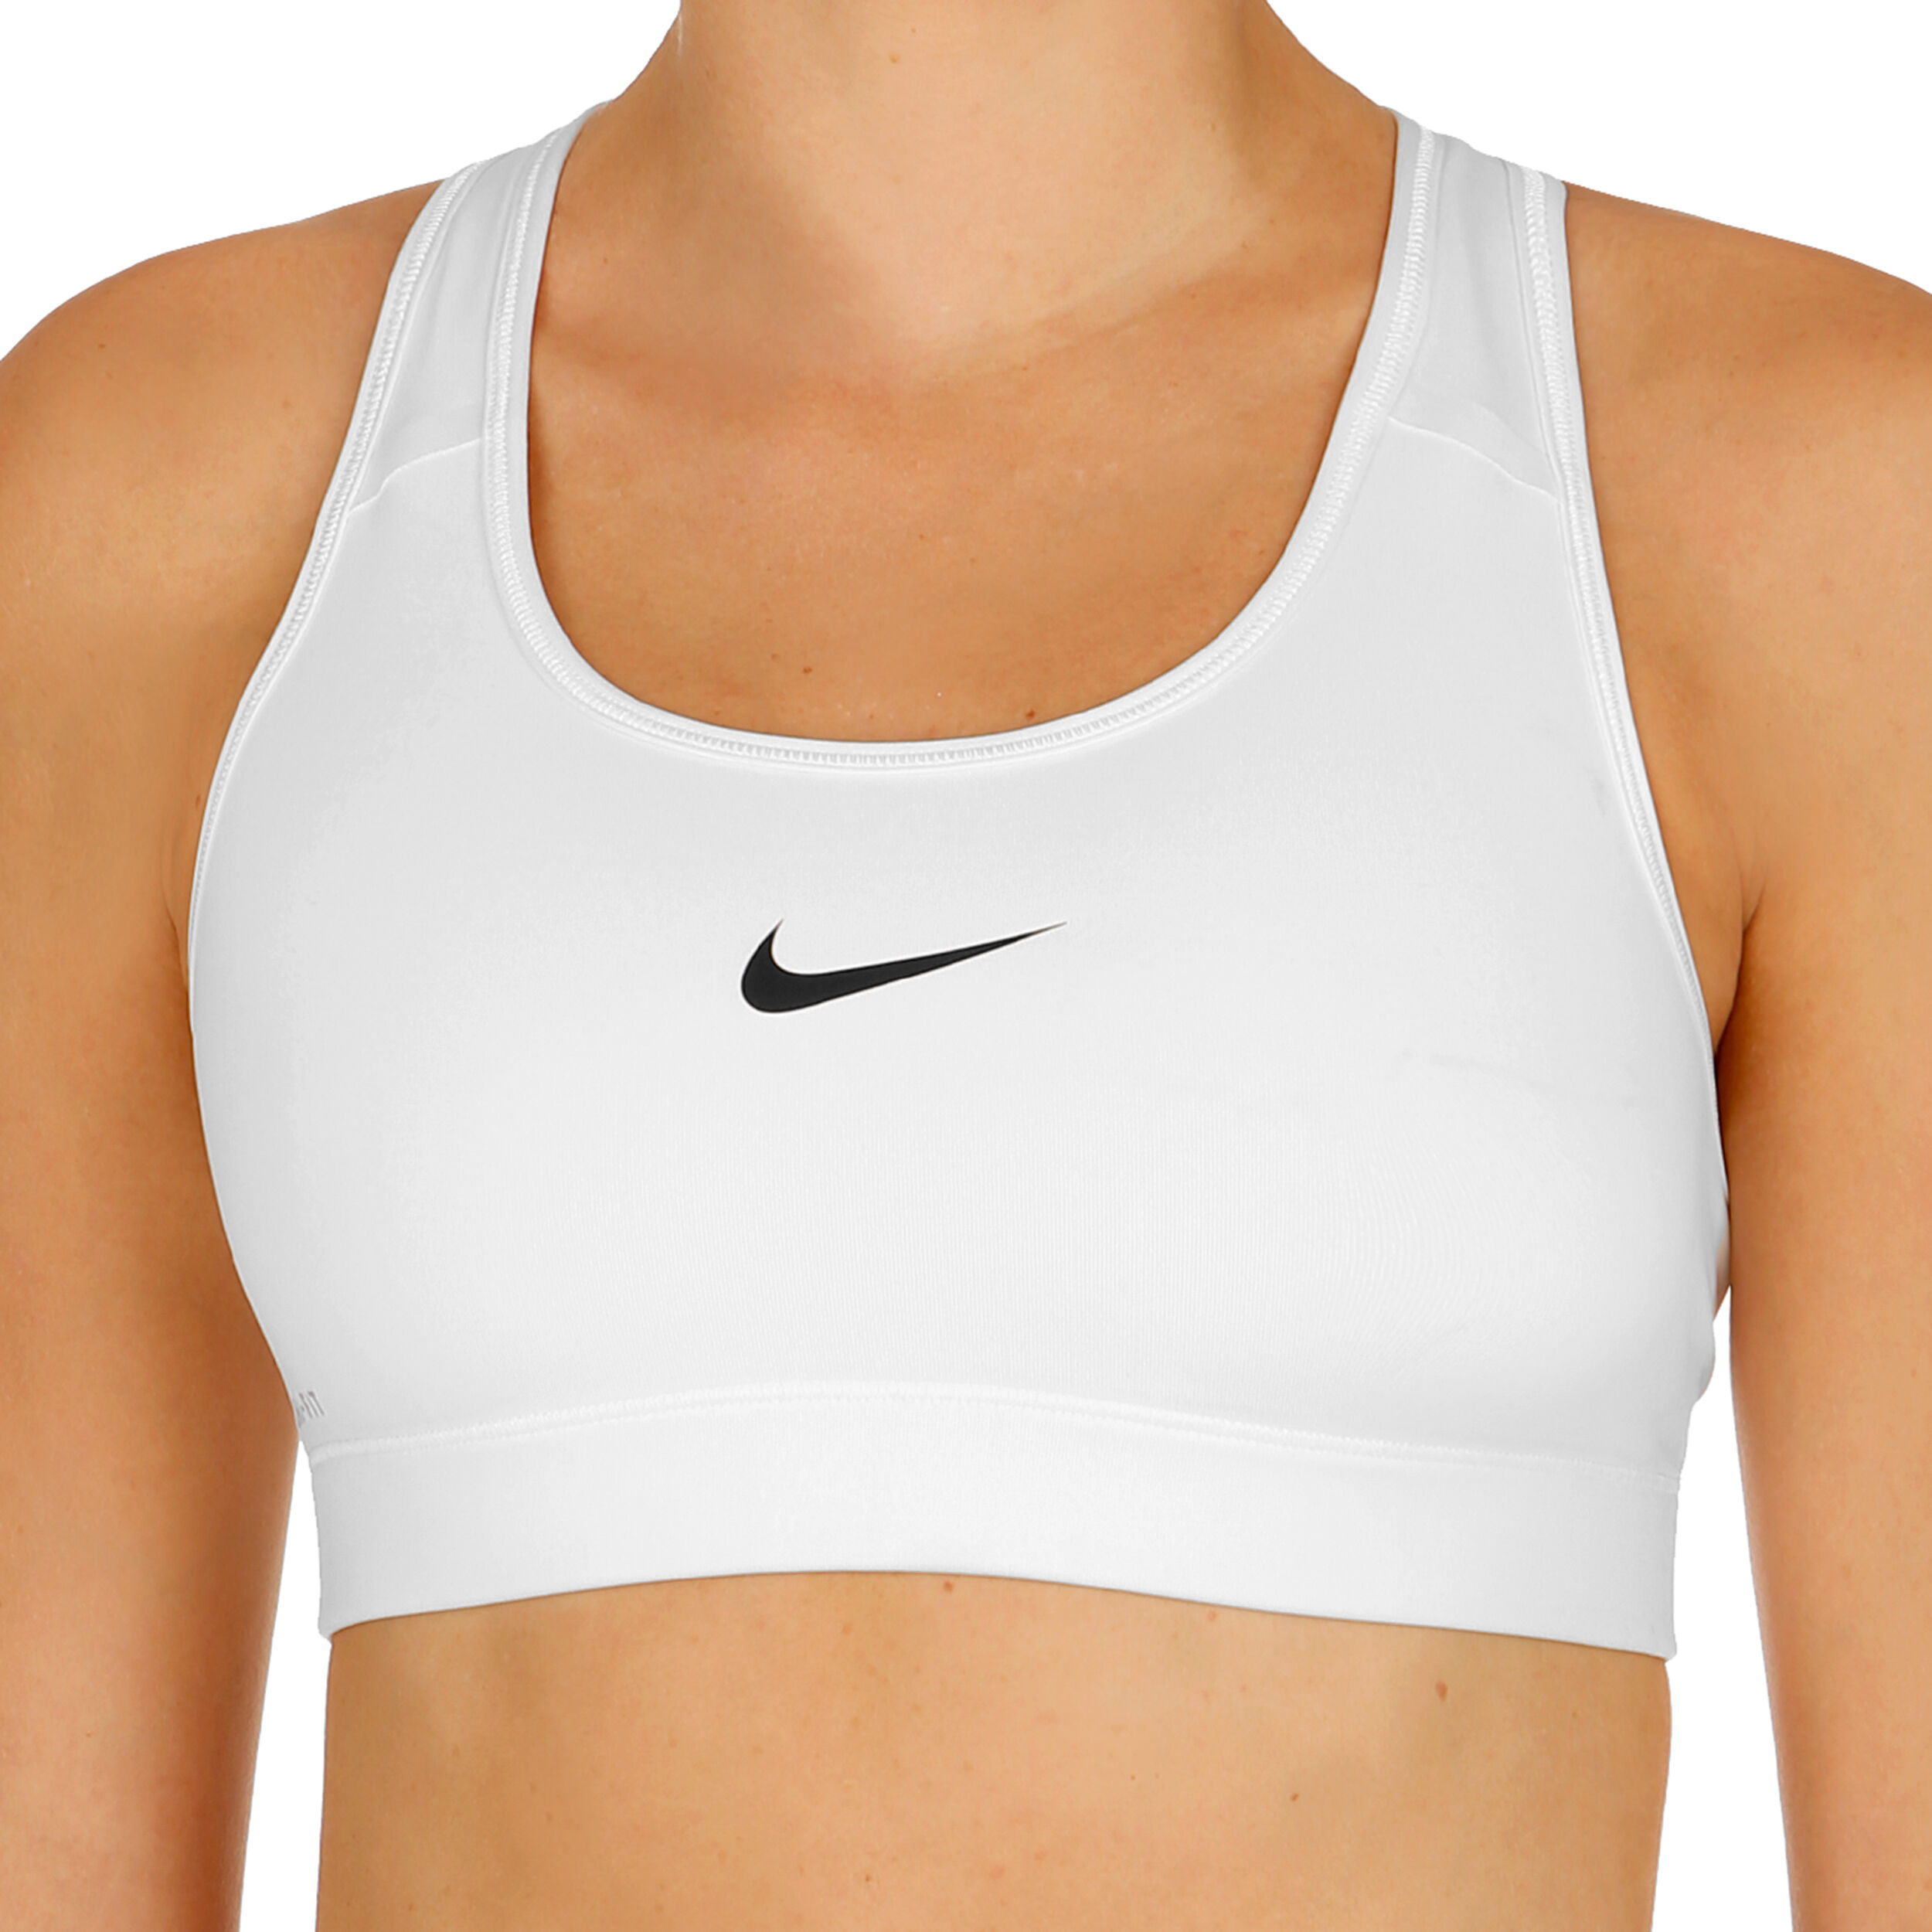 nike women's victory compression pro bra